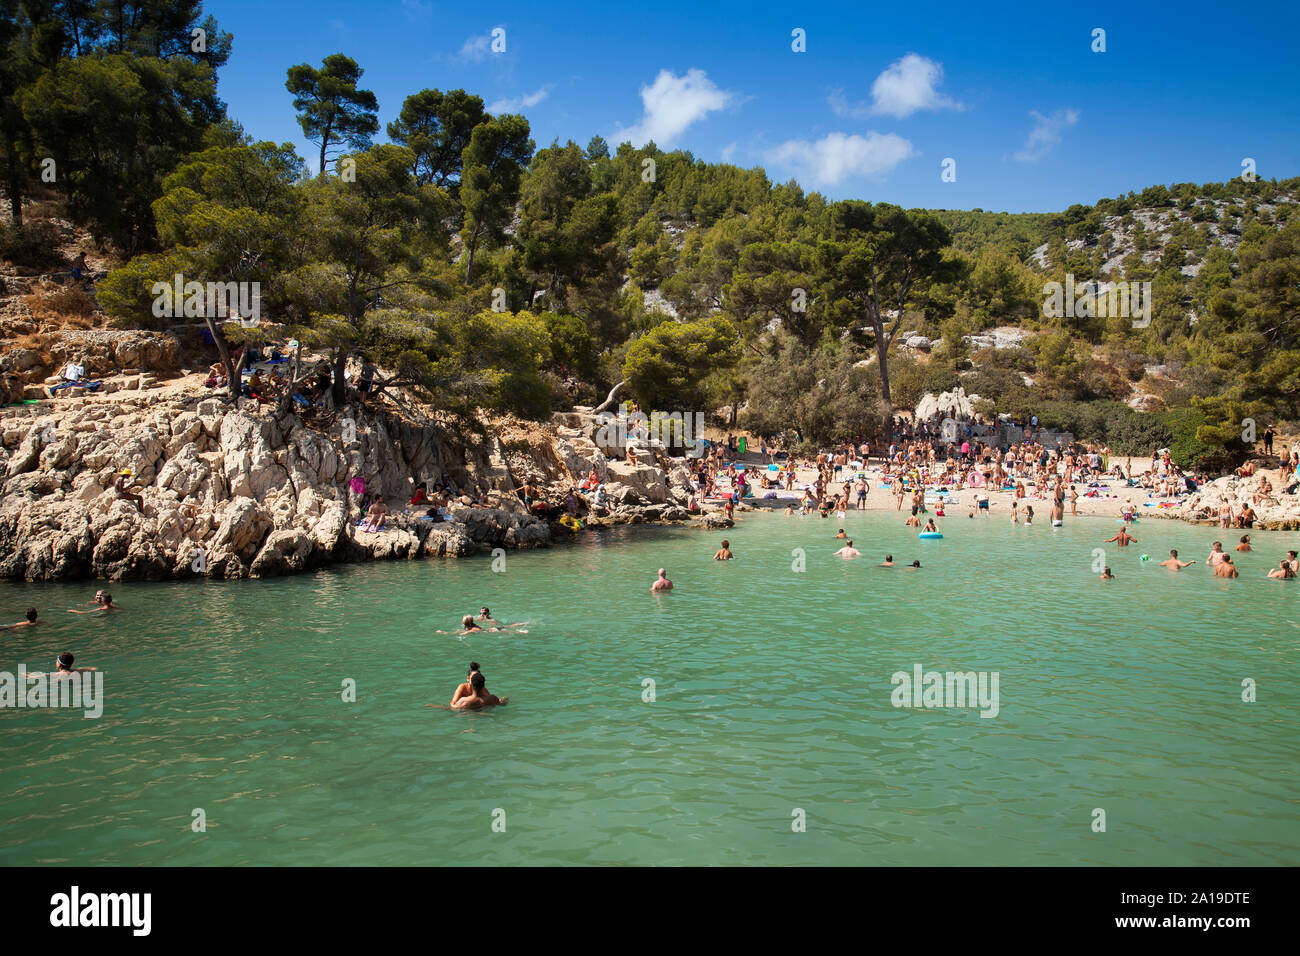 Strandliebhaber in Calanque de Port-Pin, Calanques Nationalpark, Cassis, Bouches-du-Rhône, Provence - Alpes - Côte d'Azur, Frankreich, Europa Stockfoto